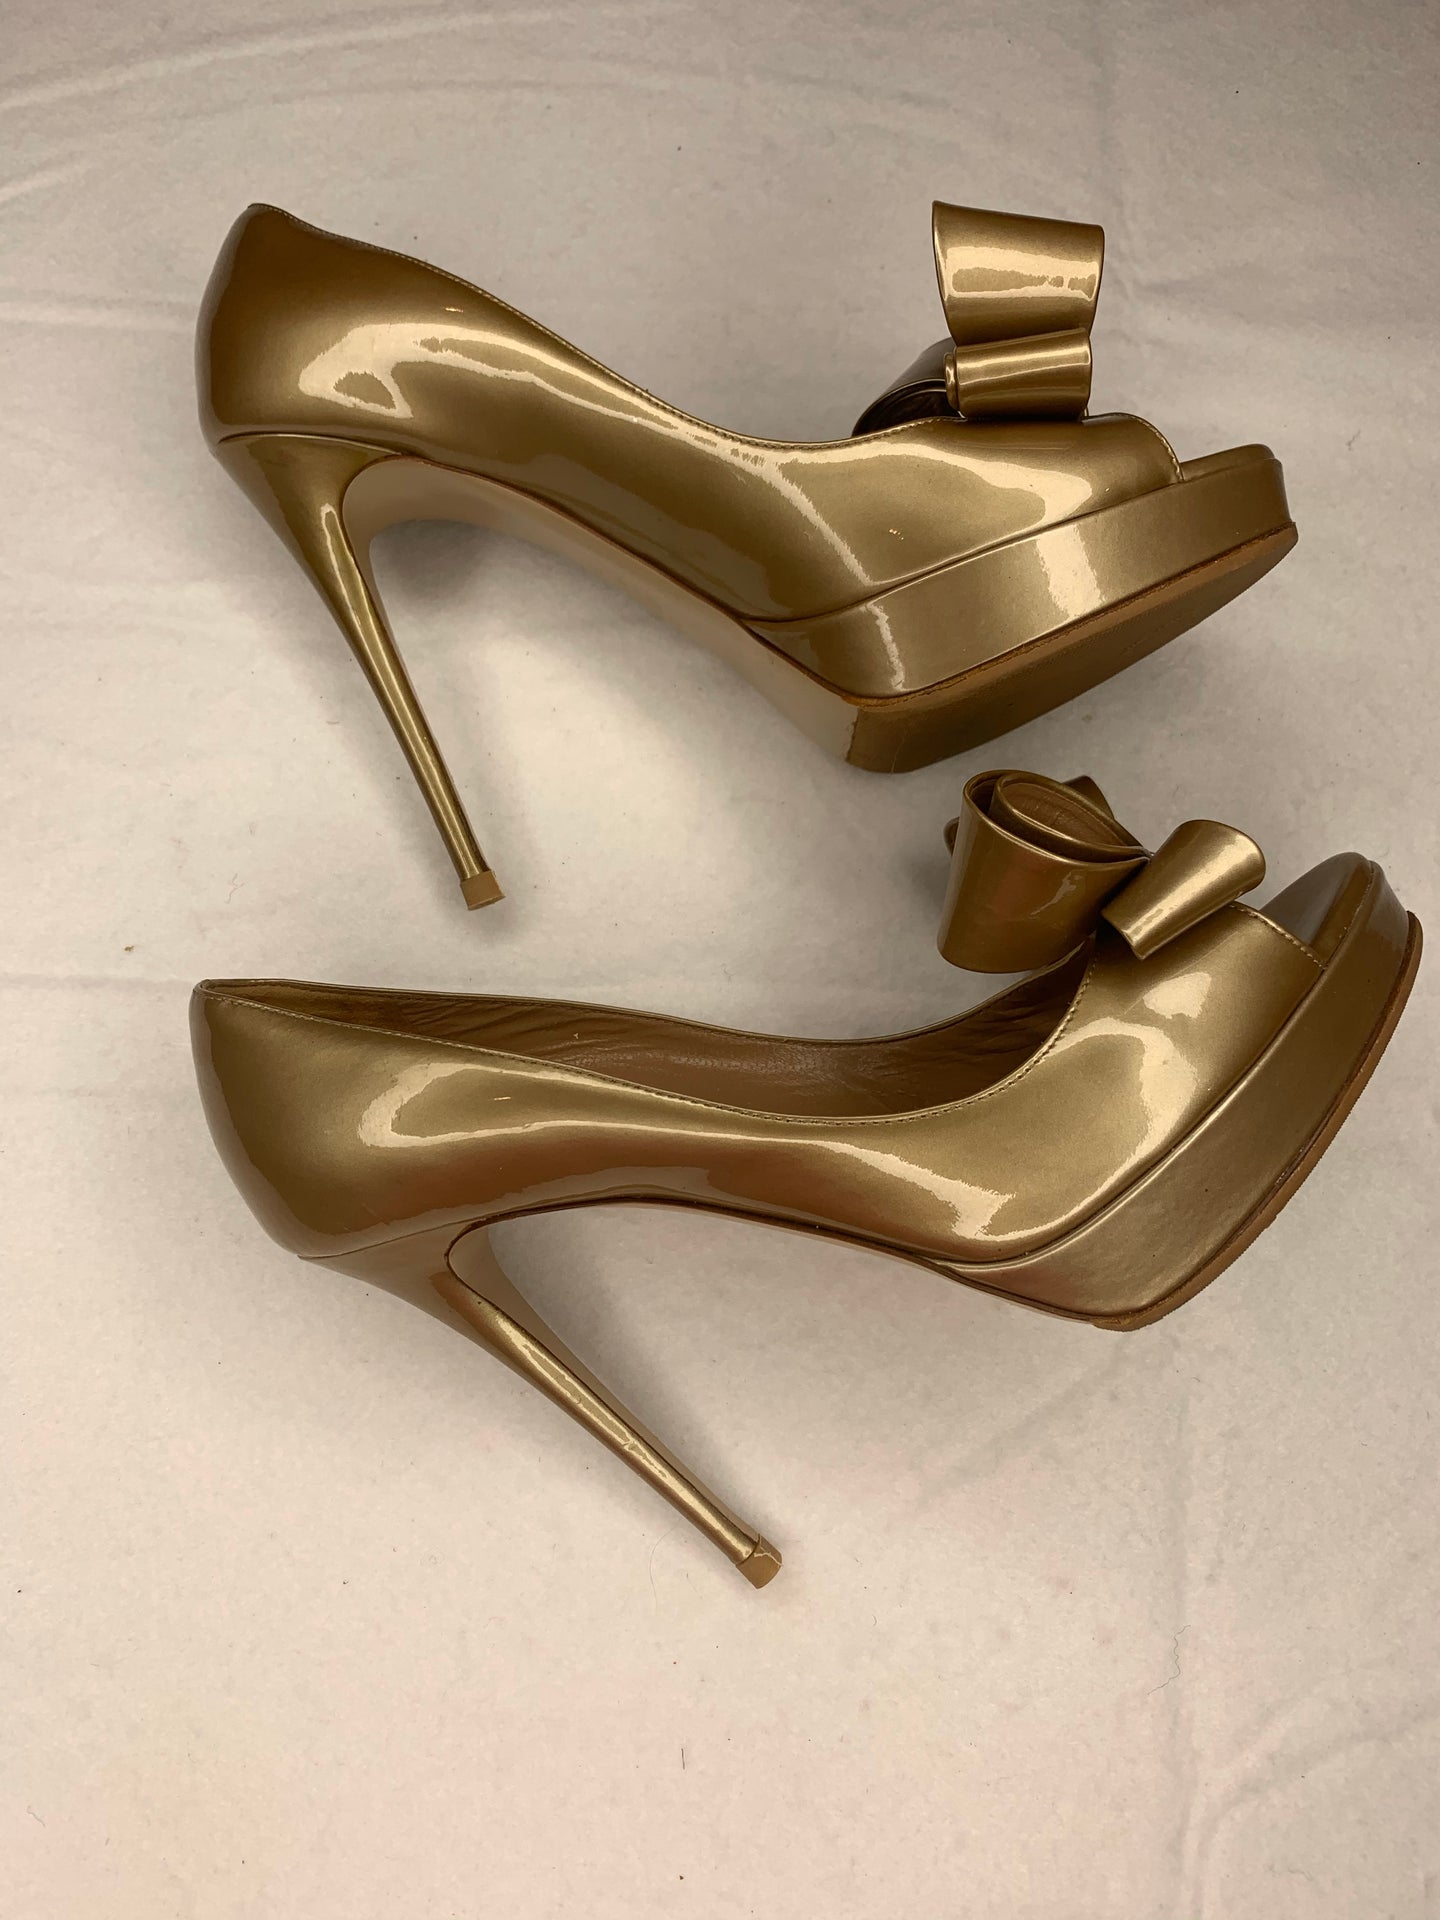 Valentino Garavani bow platform gold patent heels size 39.5 / 9.5